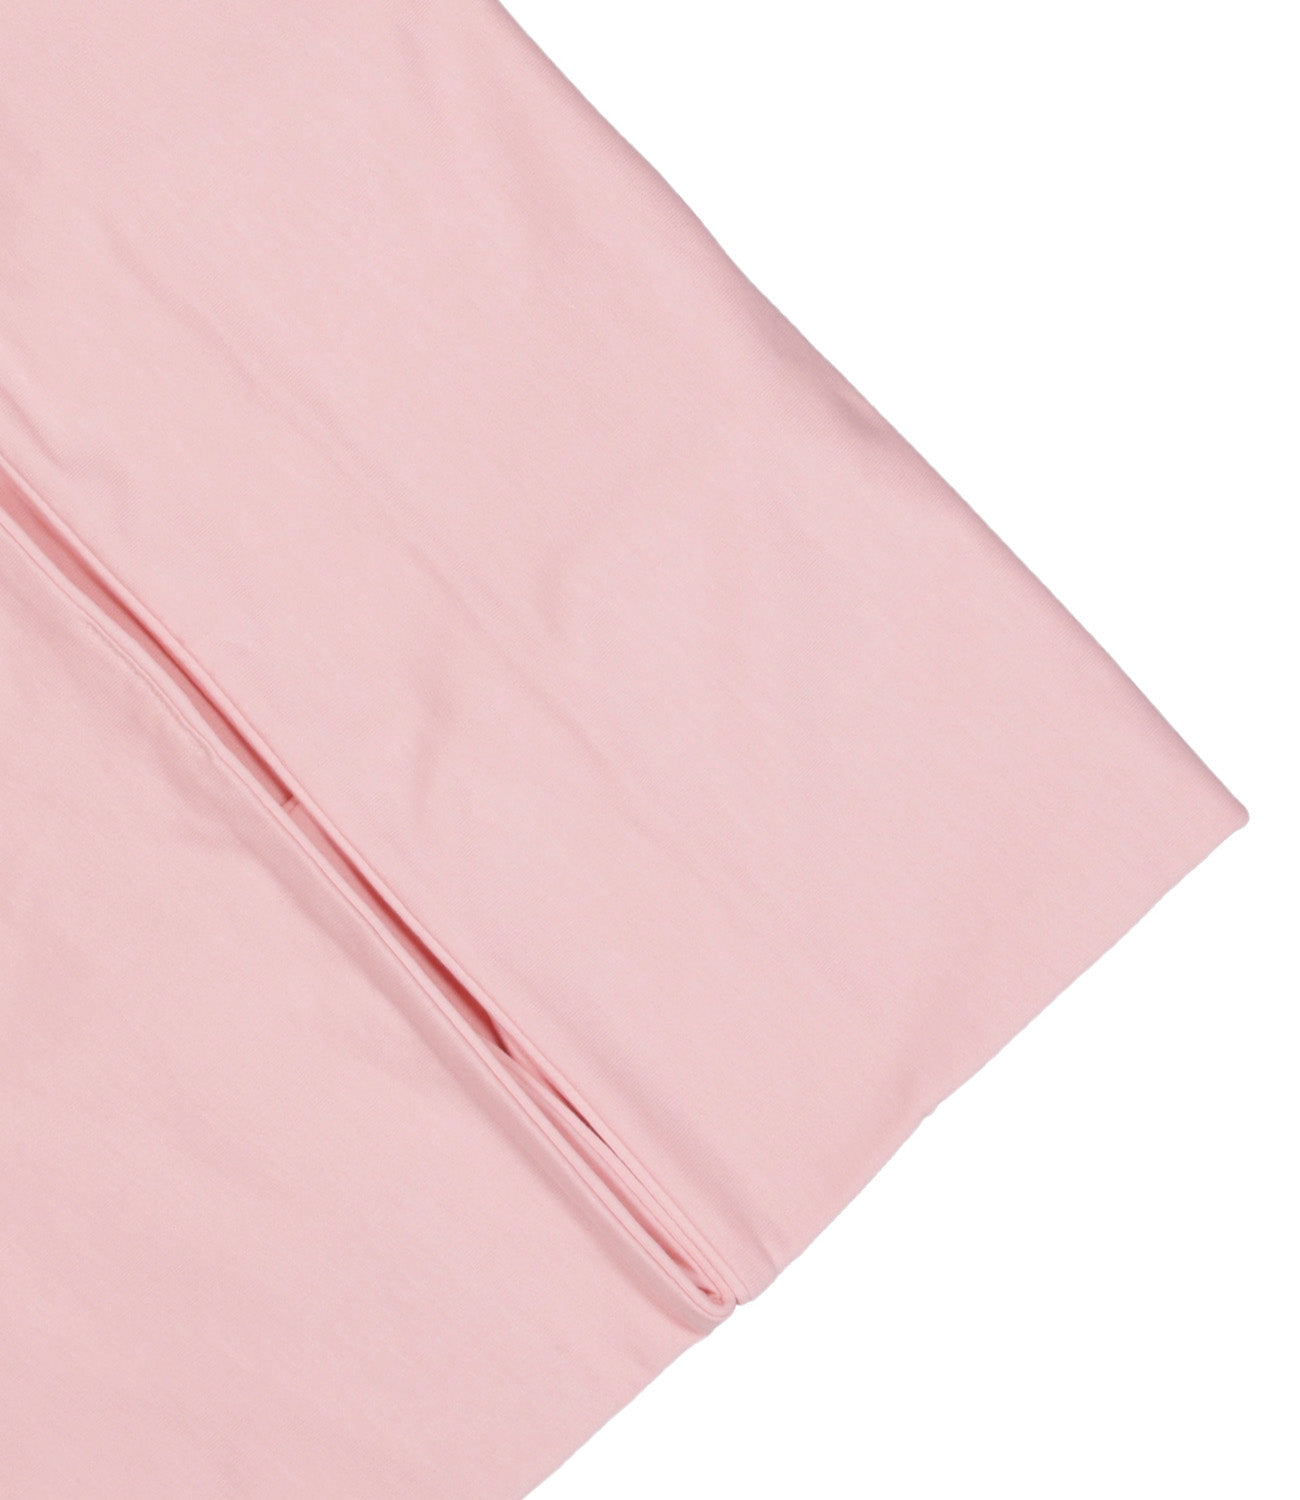 Moschino Baby | Pink Blanket